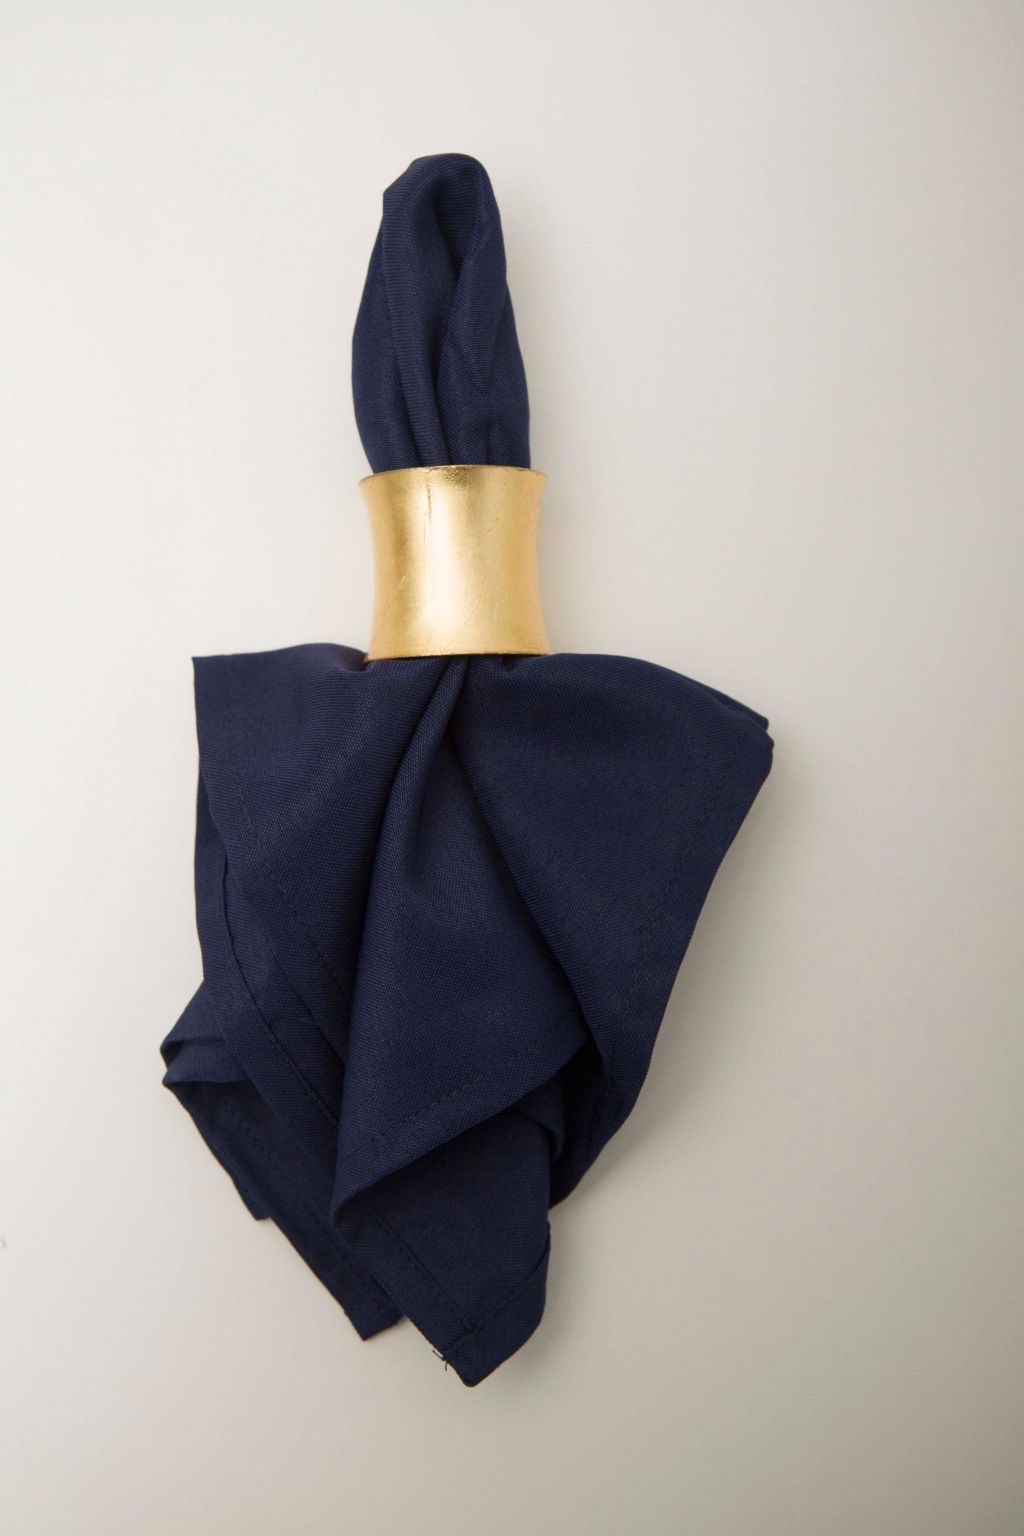 Alquiler de servilletas de tela + aro dorado (Min. 20 servilletas)